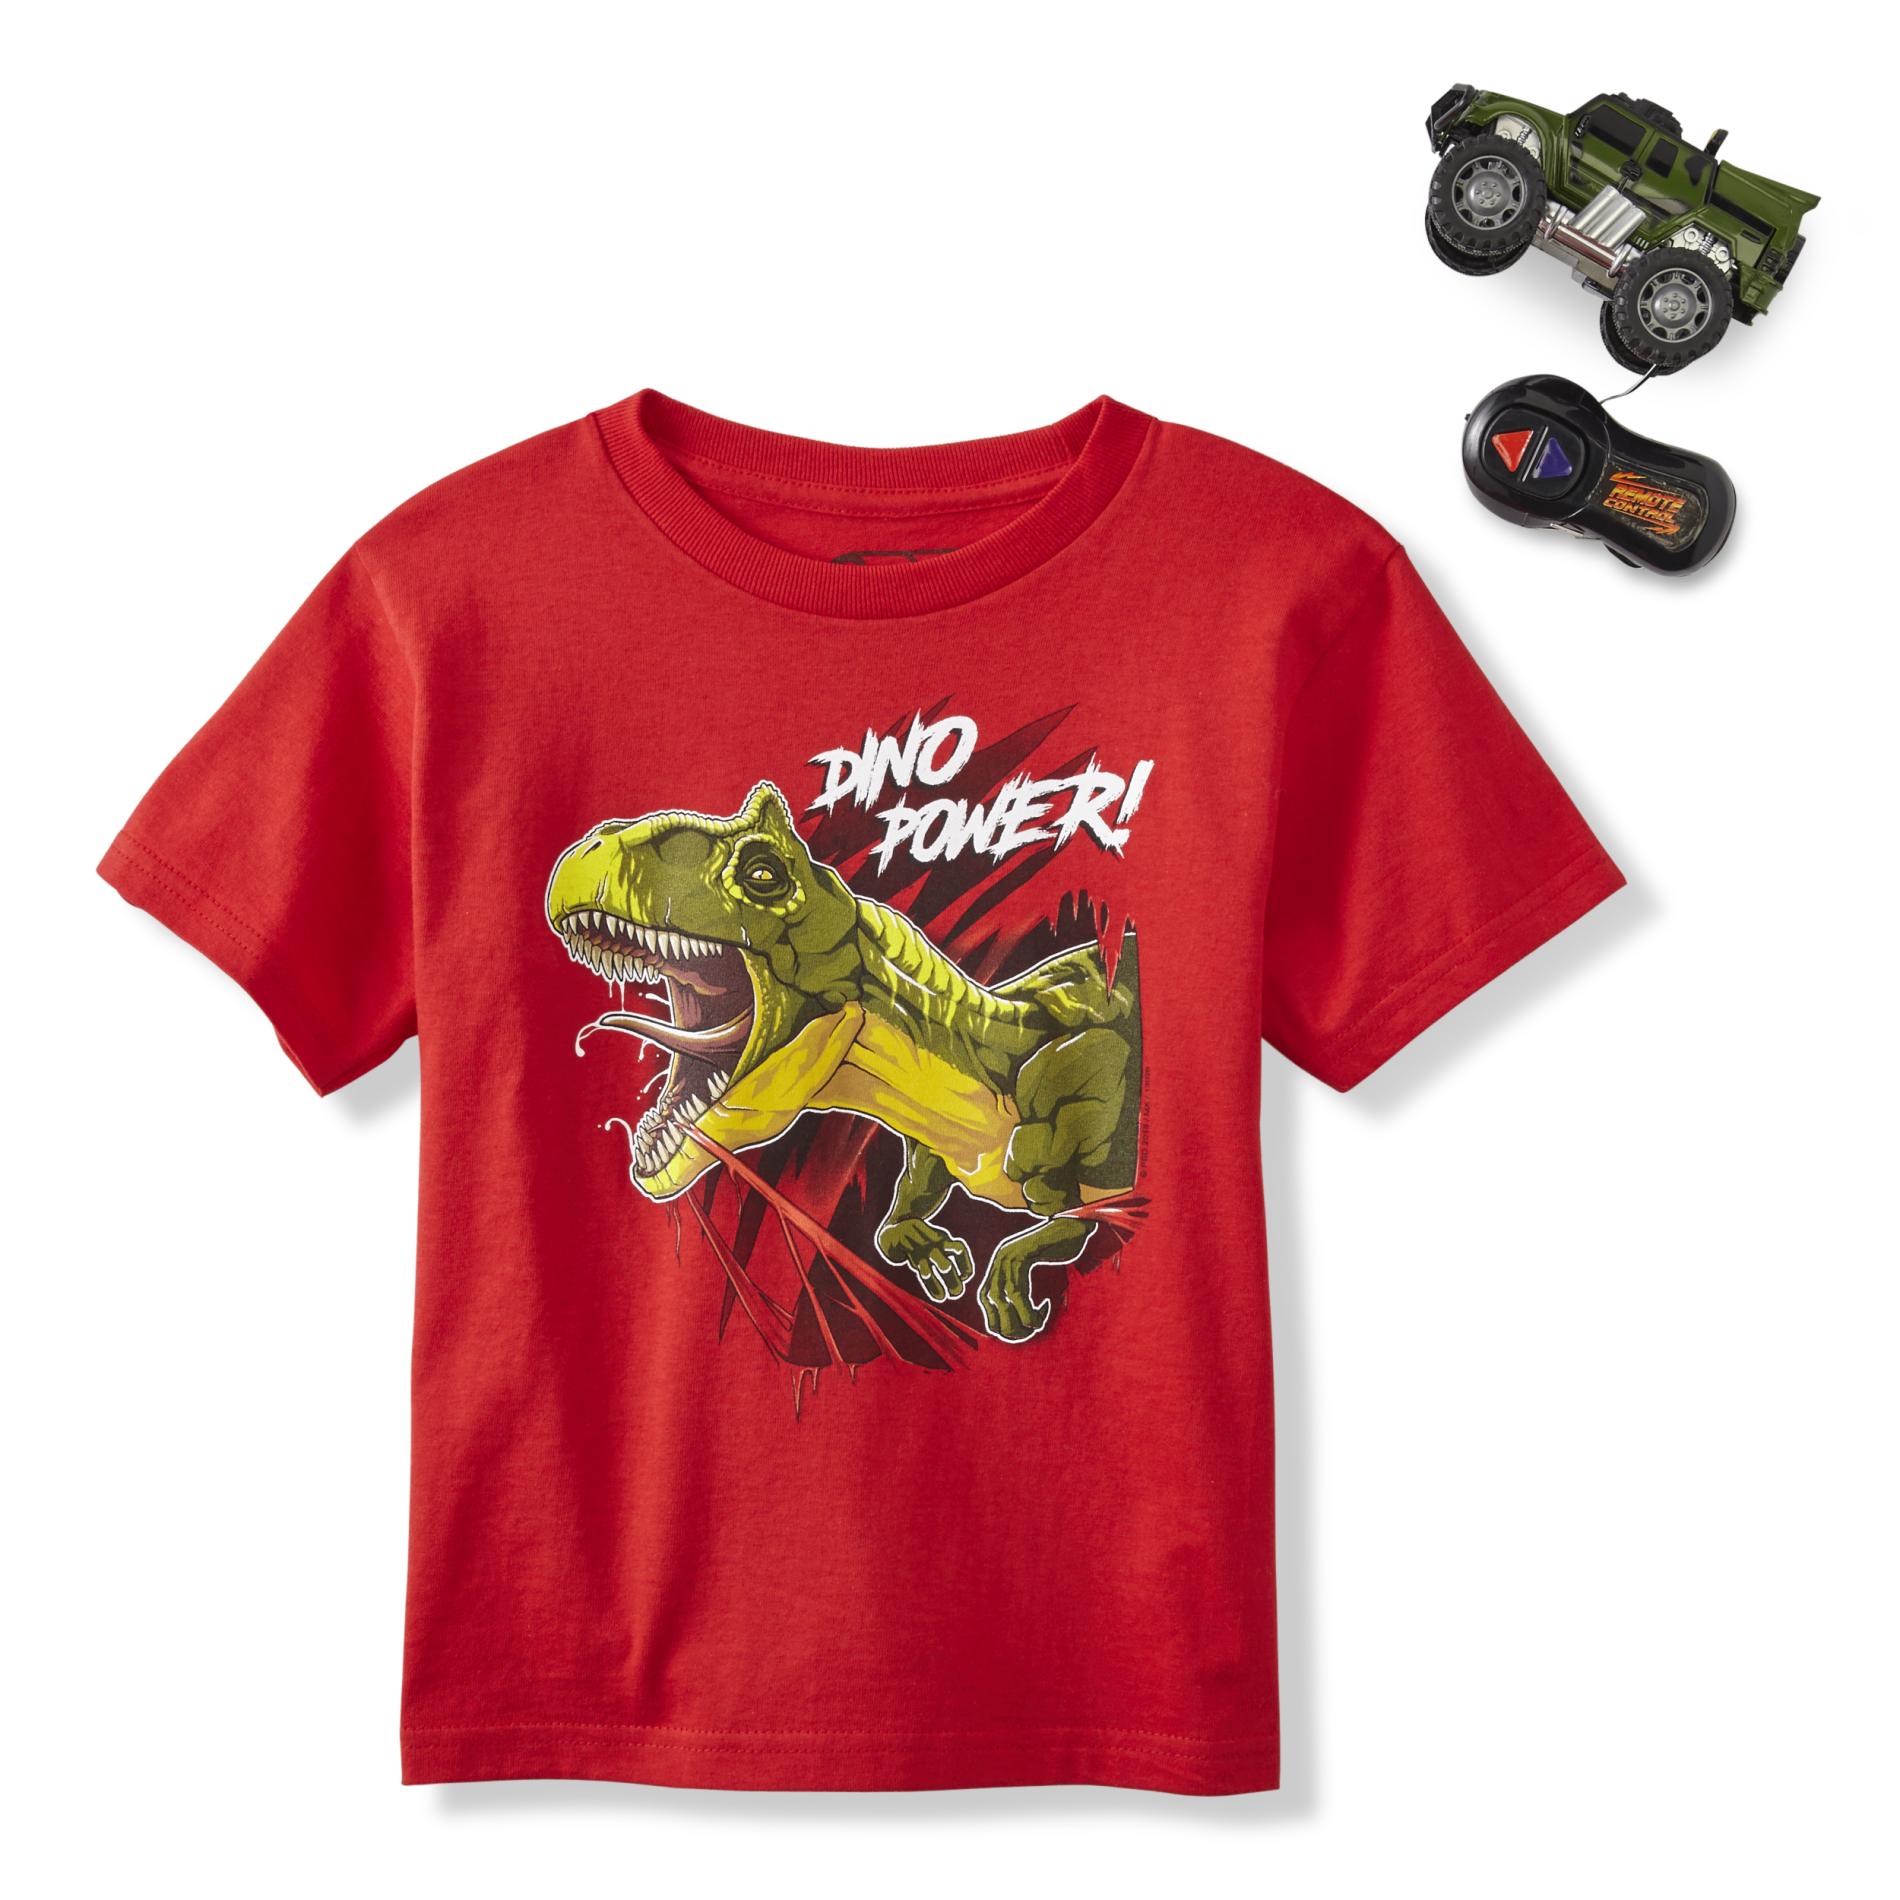 Rudeboyz Boys' Graphic T-Shirt & Remote Control Truck - Dino Power